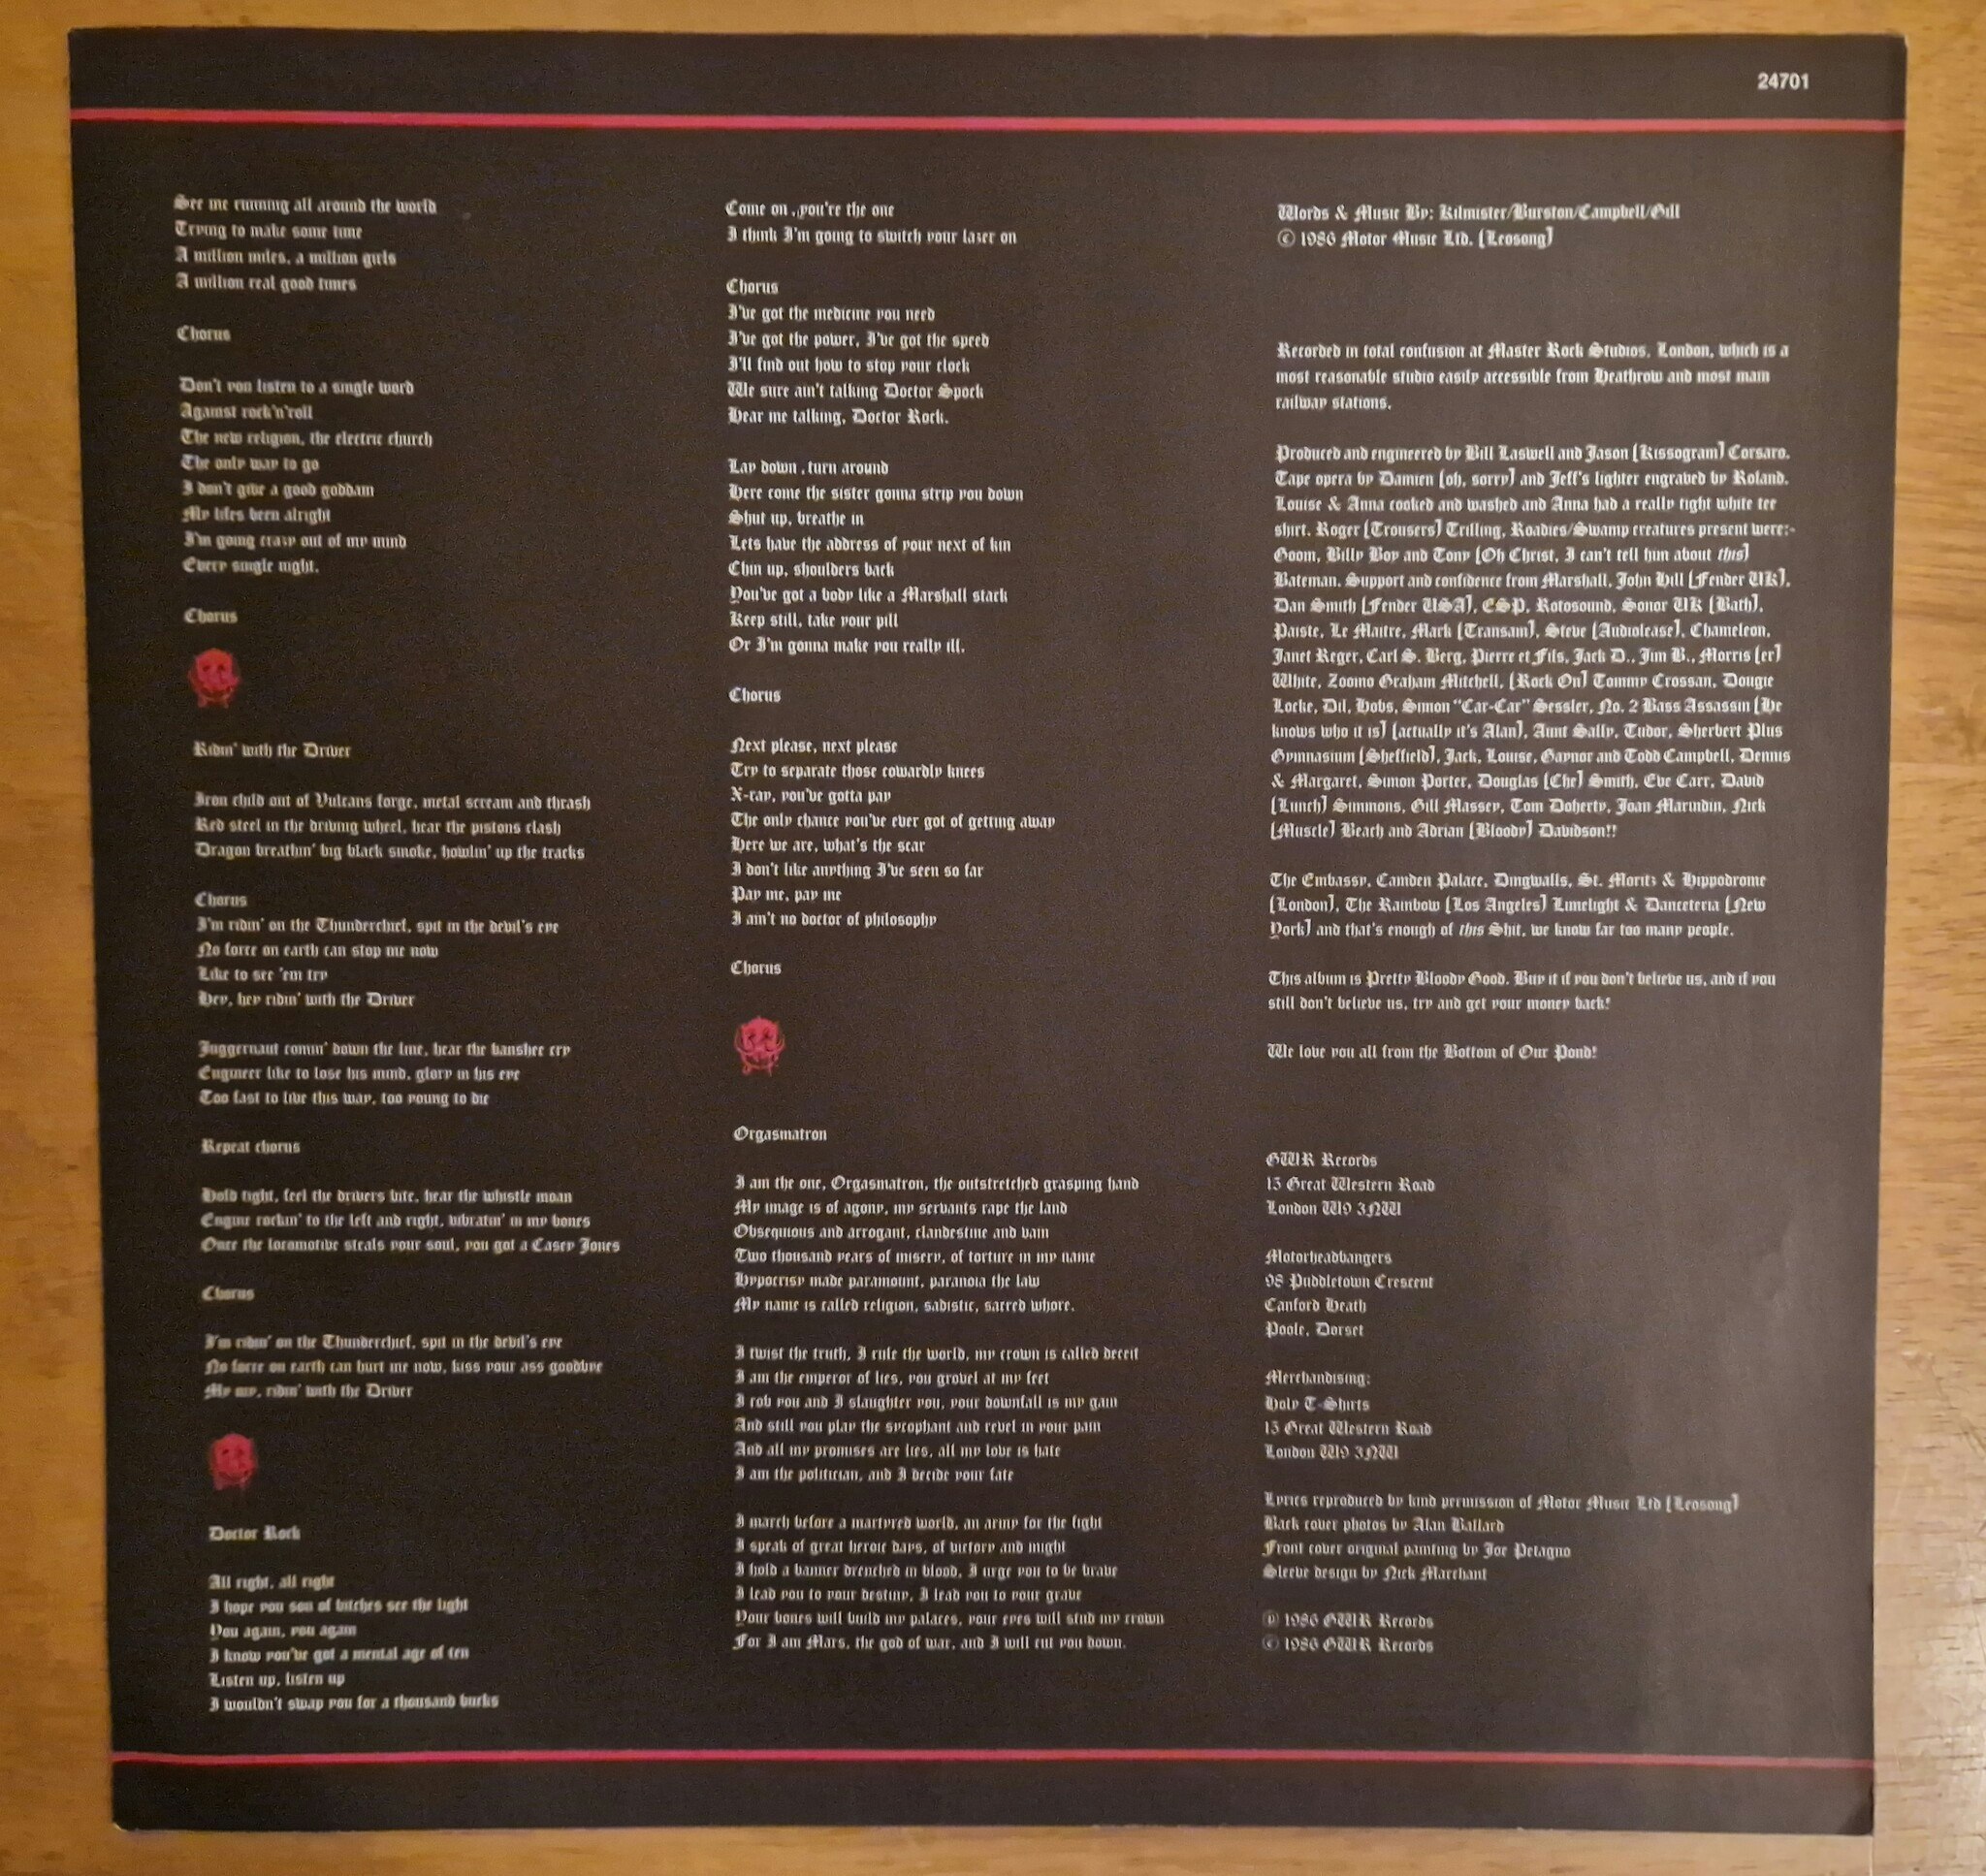 Motorhead, Orgasmatron. Vinyl LP